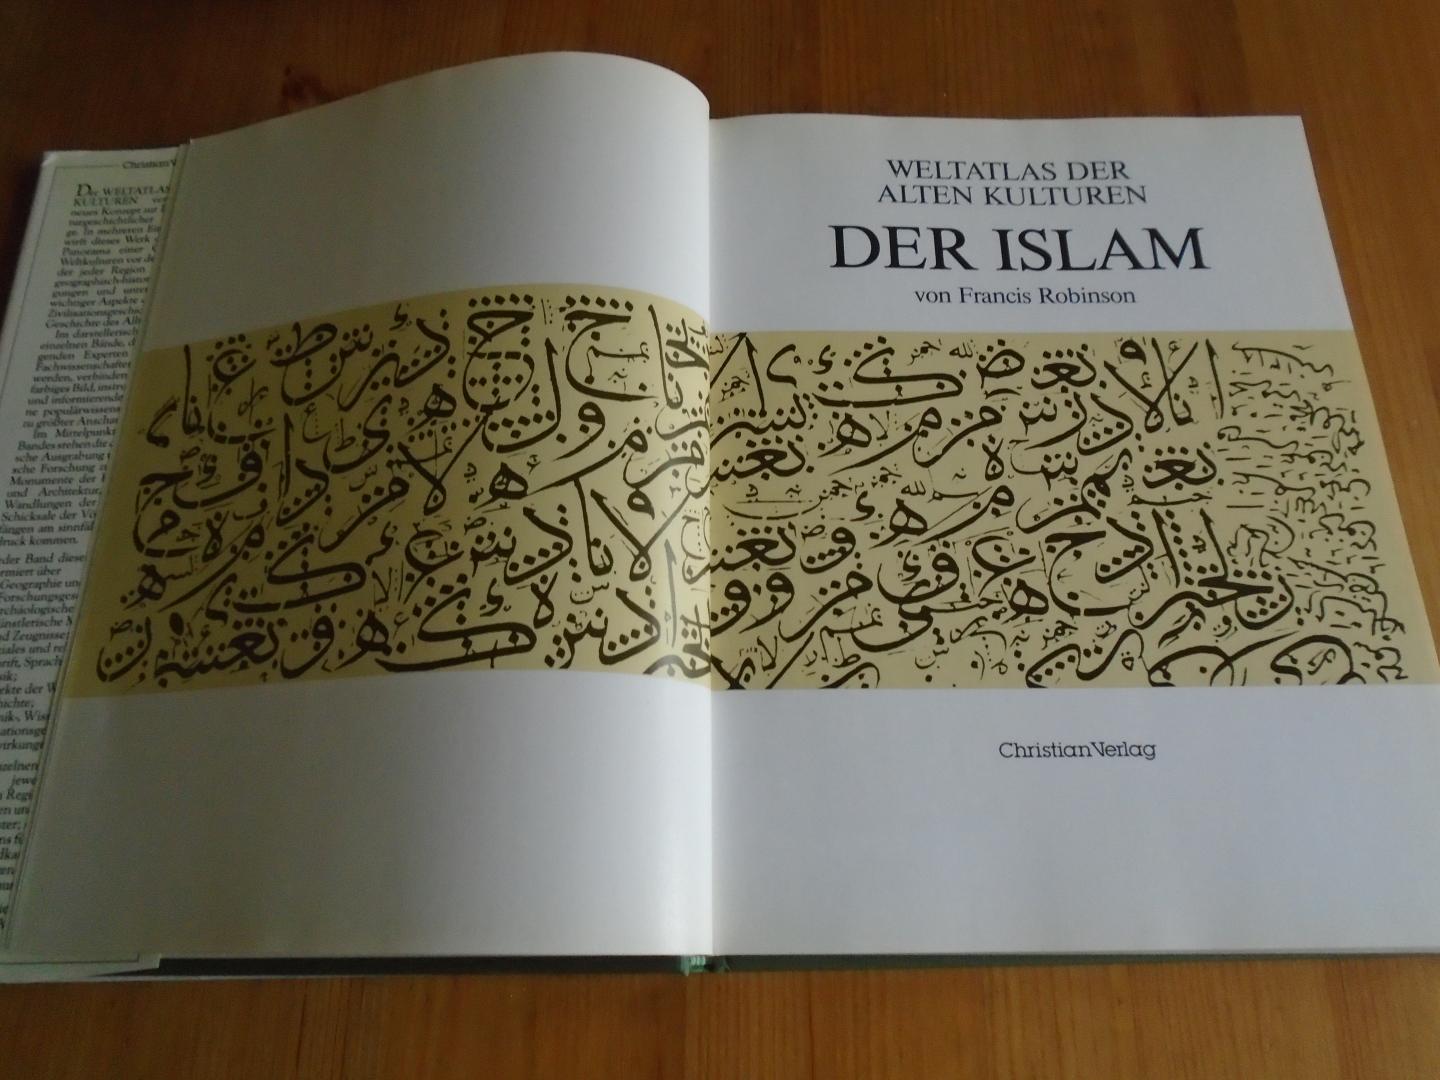 Robinson, F. - Weltatlas der alten Kulturen der Islam